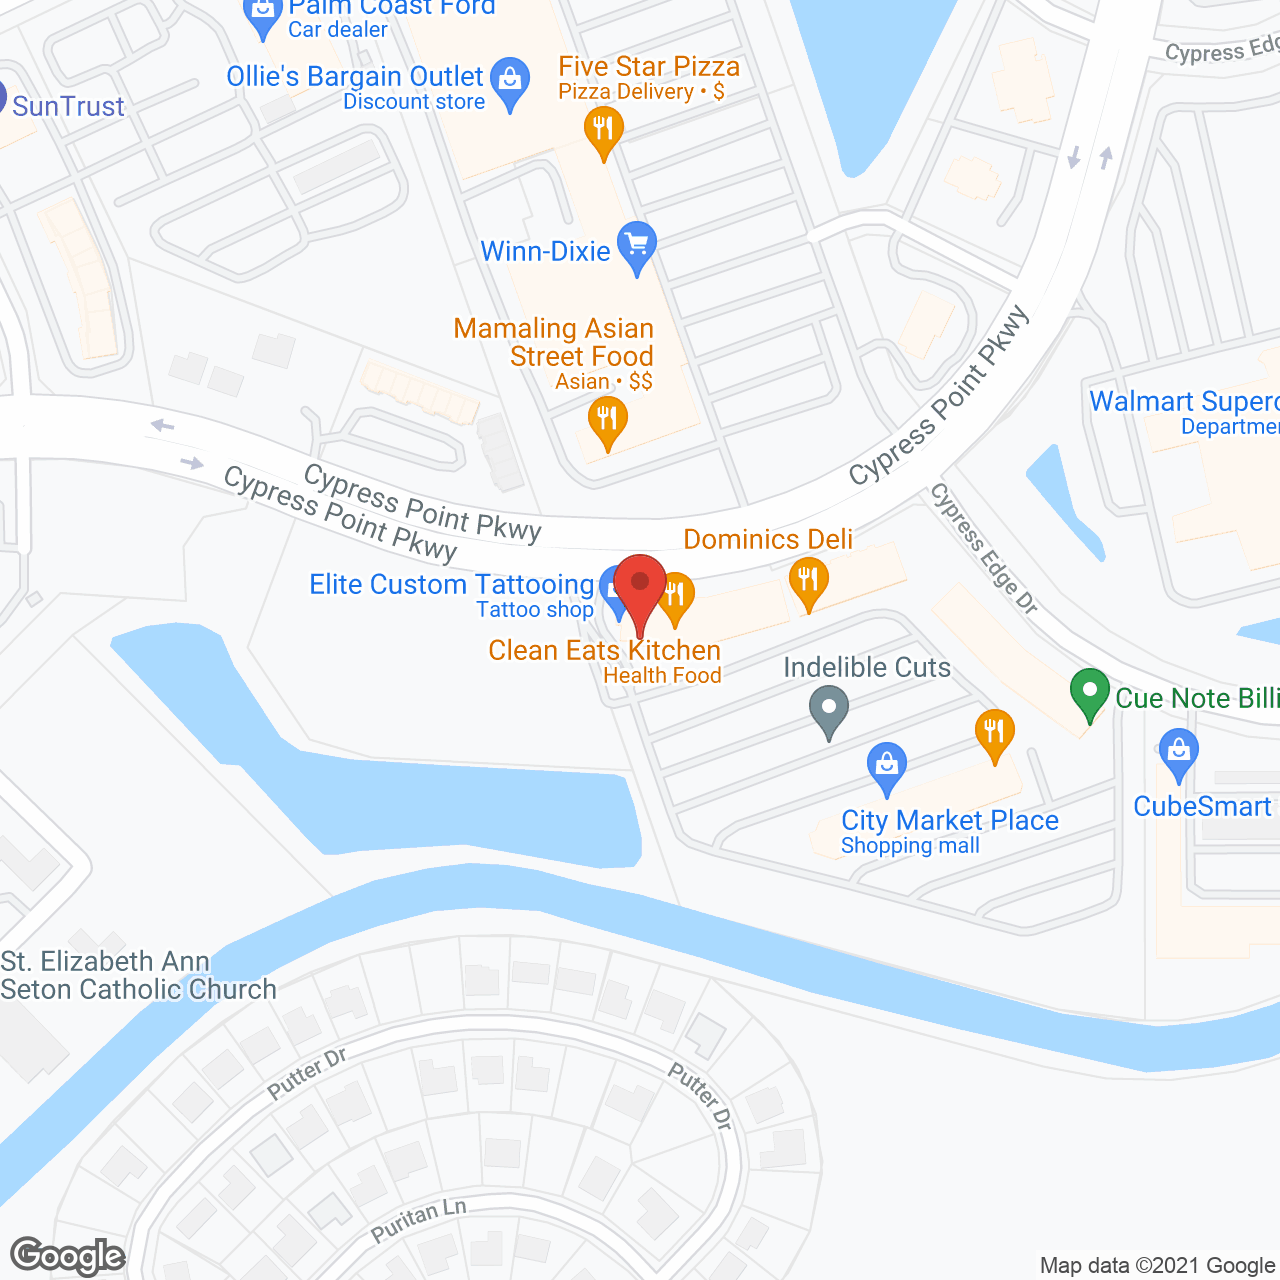 Sancerre at Palm Coast in google map